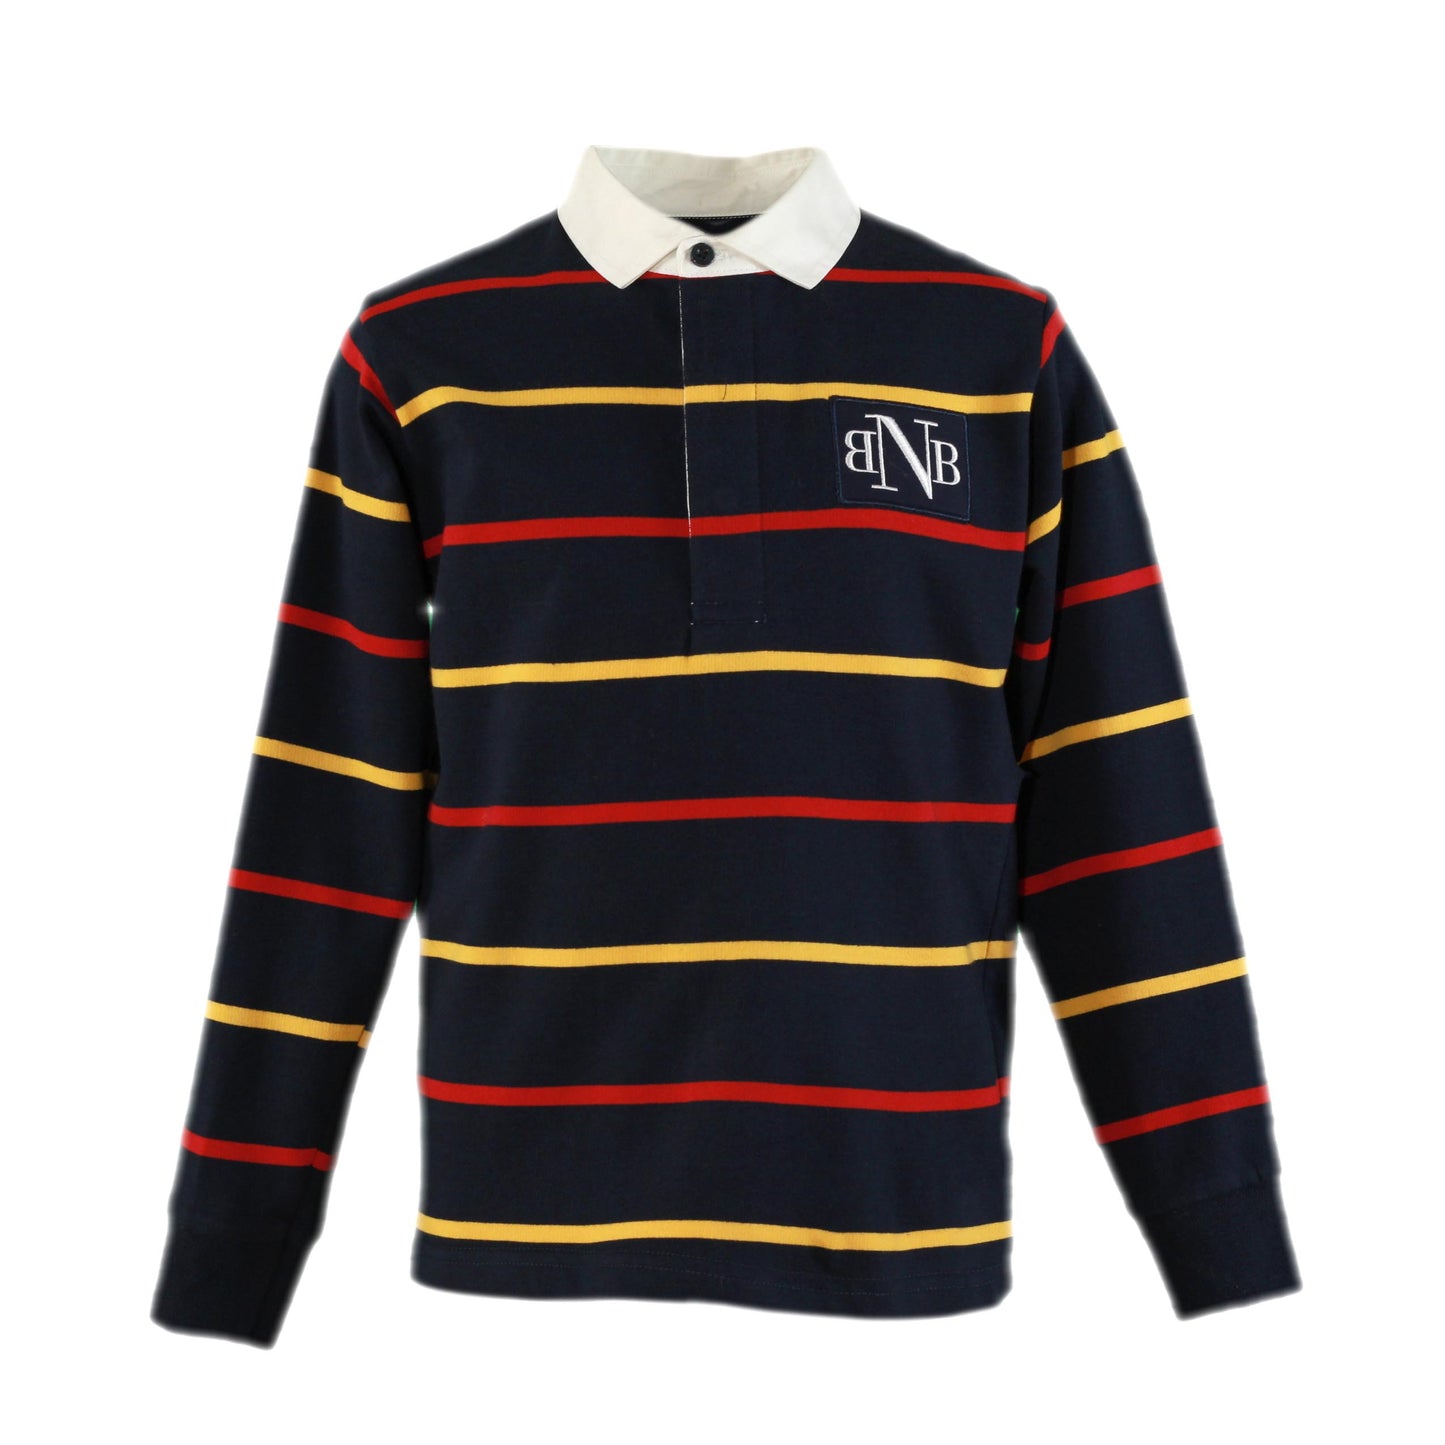 AW22 MIRANDA NEL BLU Navy Stripe Boys Polo Shirt - 1304P